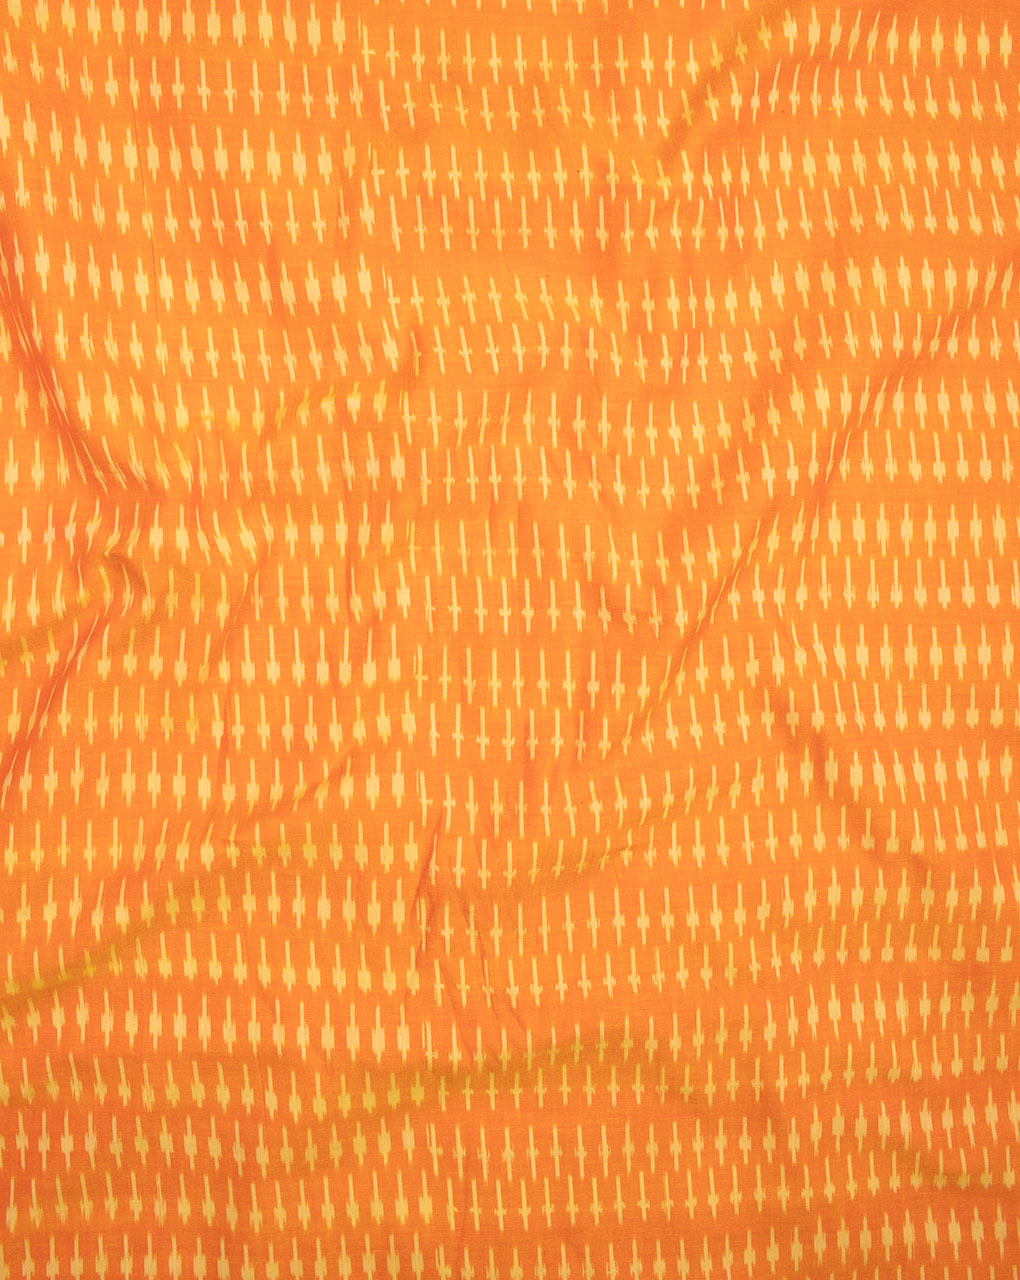 Woven Mercerized Ikat Cotton Fabric - Fabriclore.com